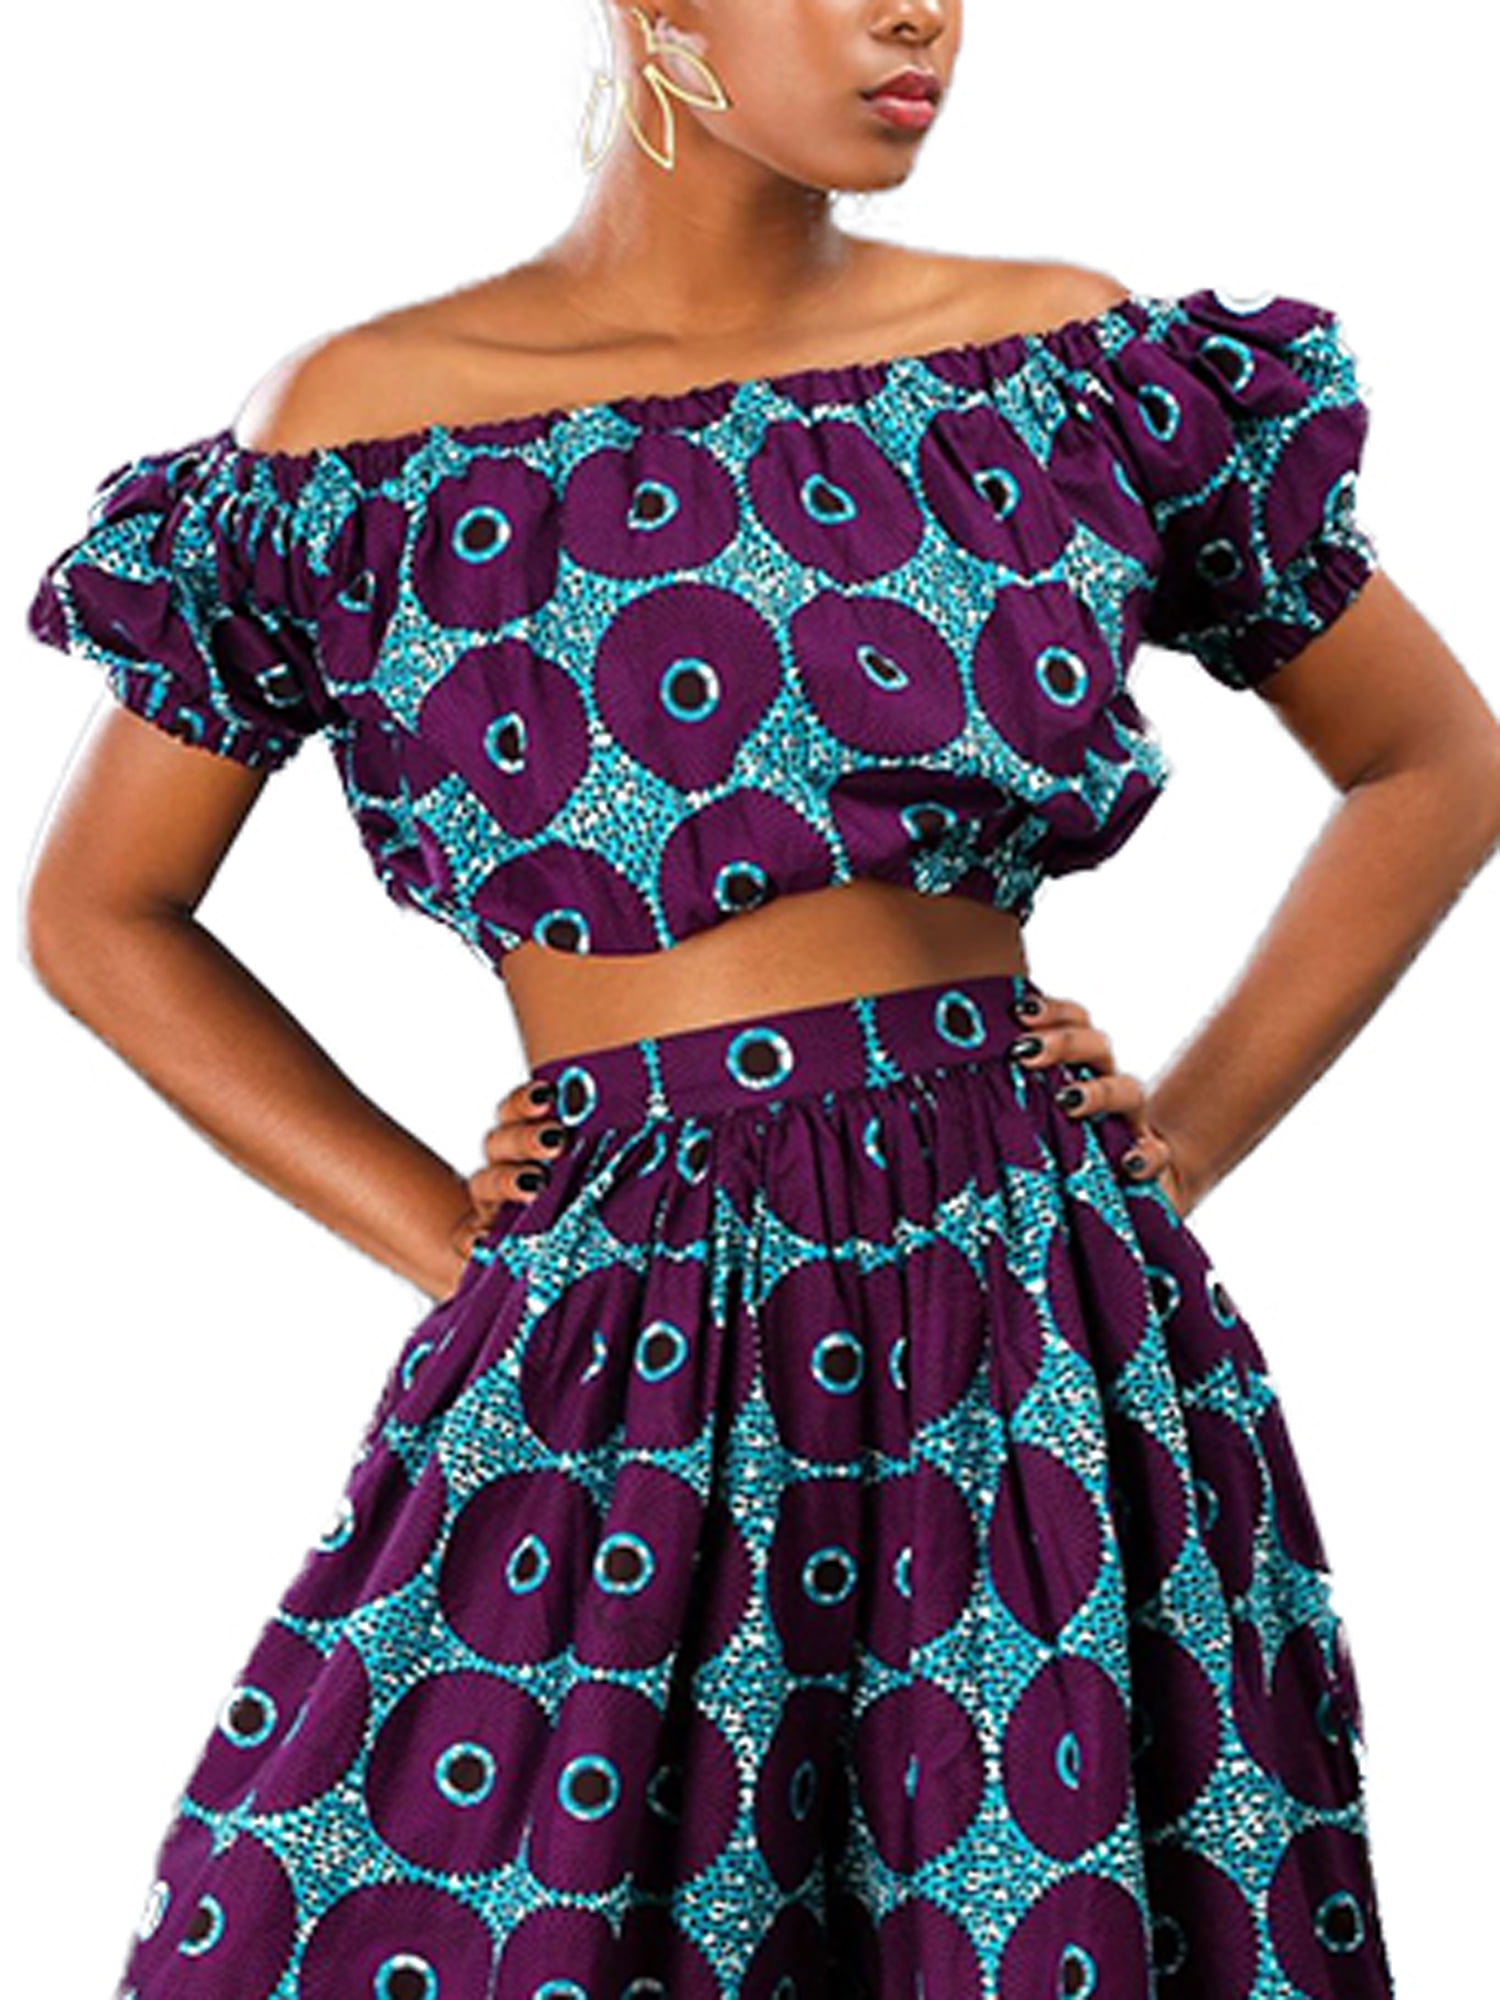 Dress Top Butterick Patterns B62580Y0 Misses Cardigan Belt Y XSM-SML-MED Skirt and Pants